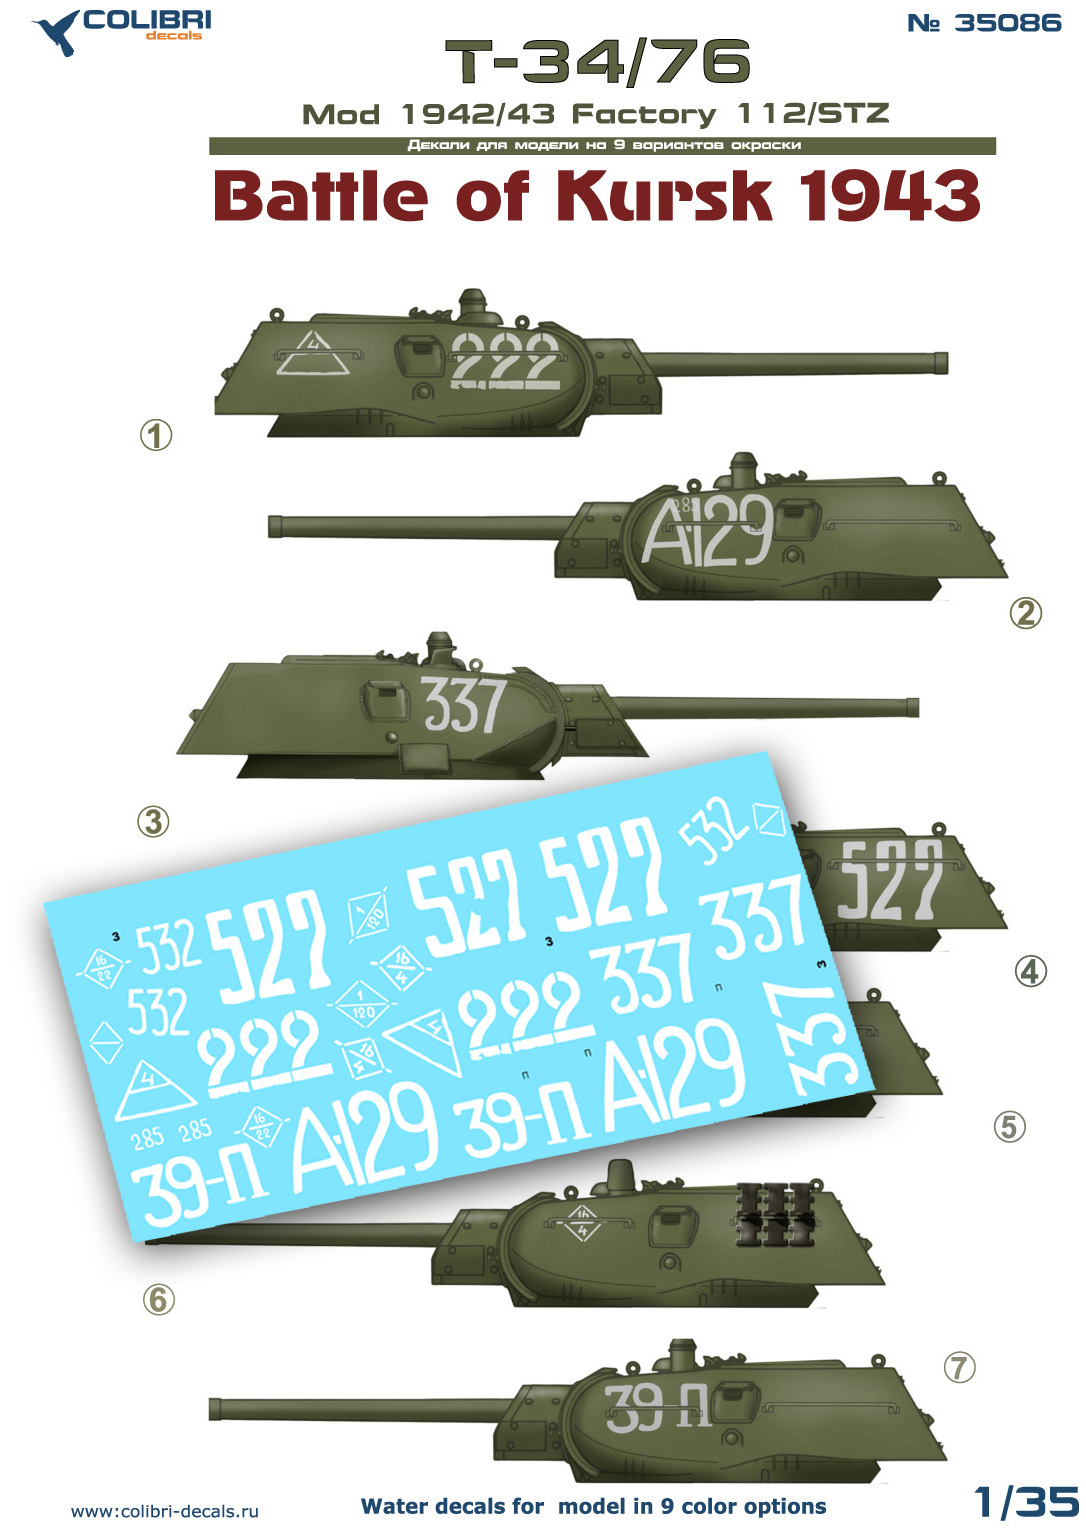 Decal 1/35 Т-34/76 мod 1942/43 Factory 112/STZ Battle of Kursk 1943 (Colibri Decals)